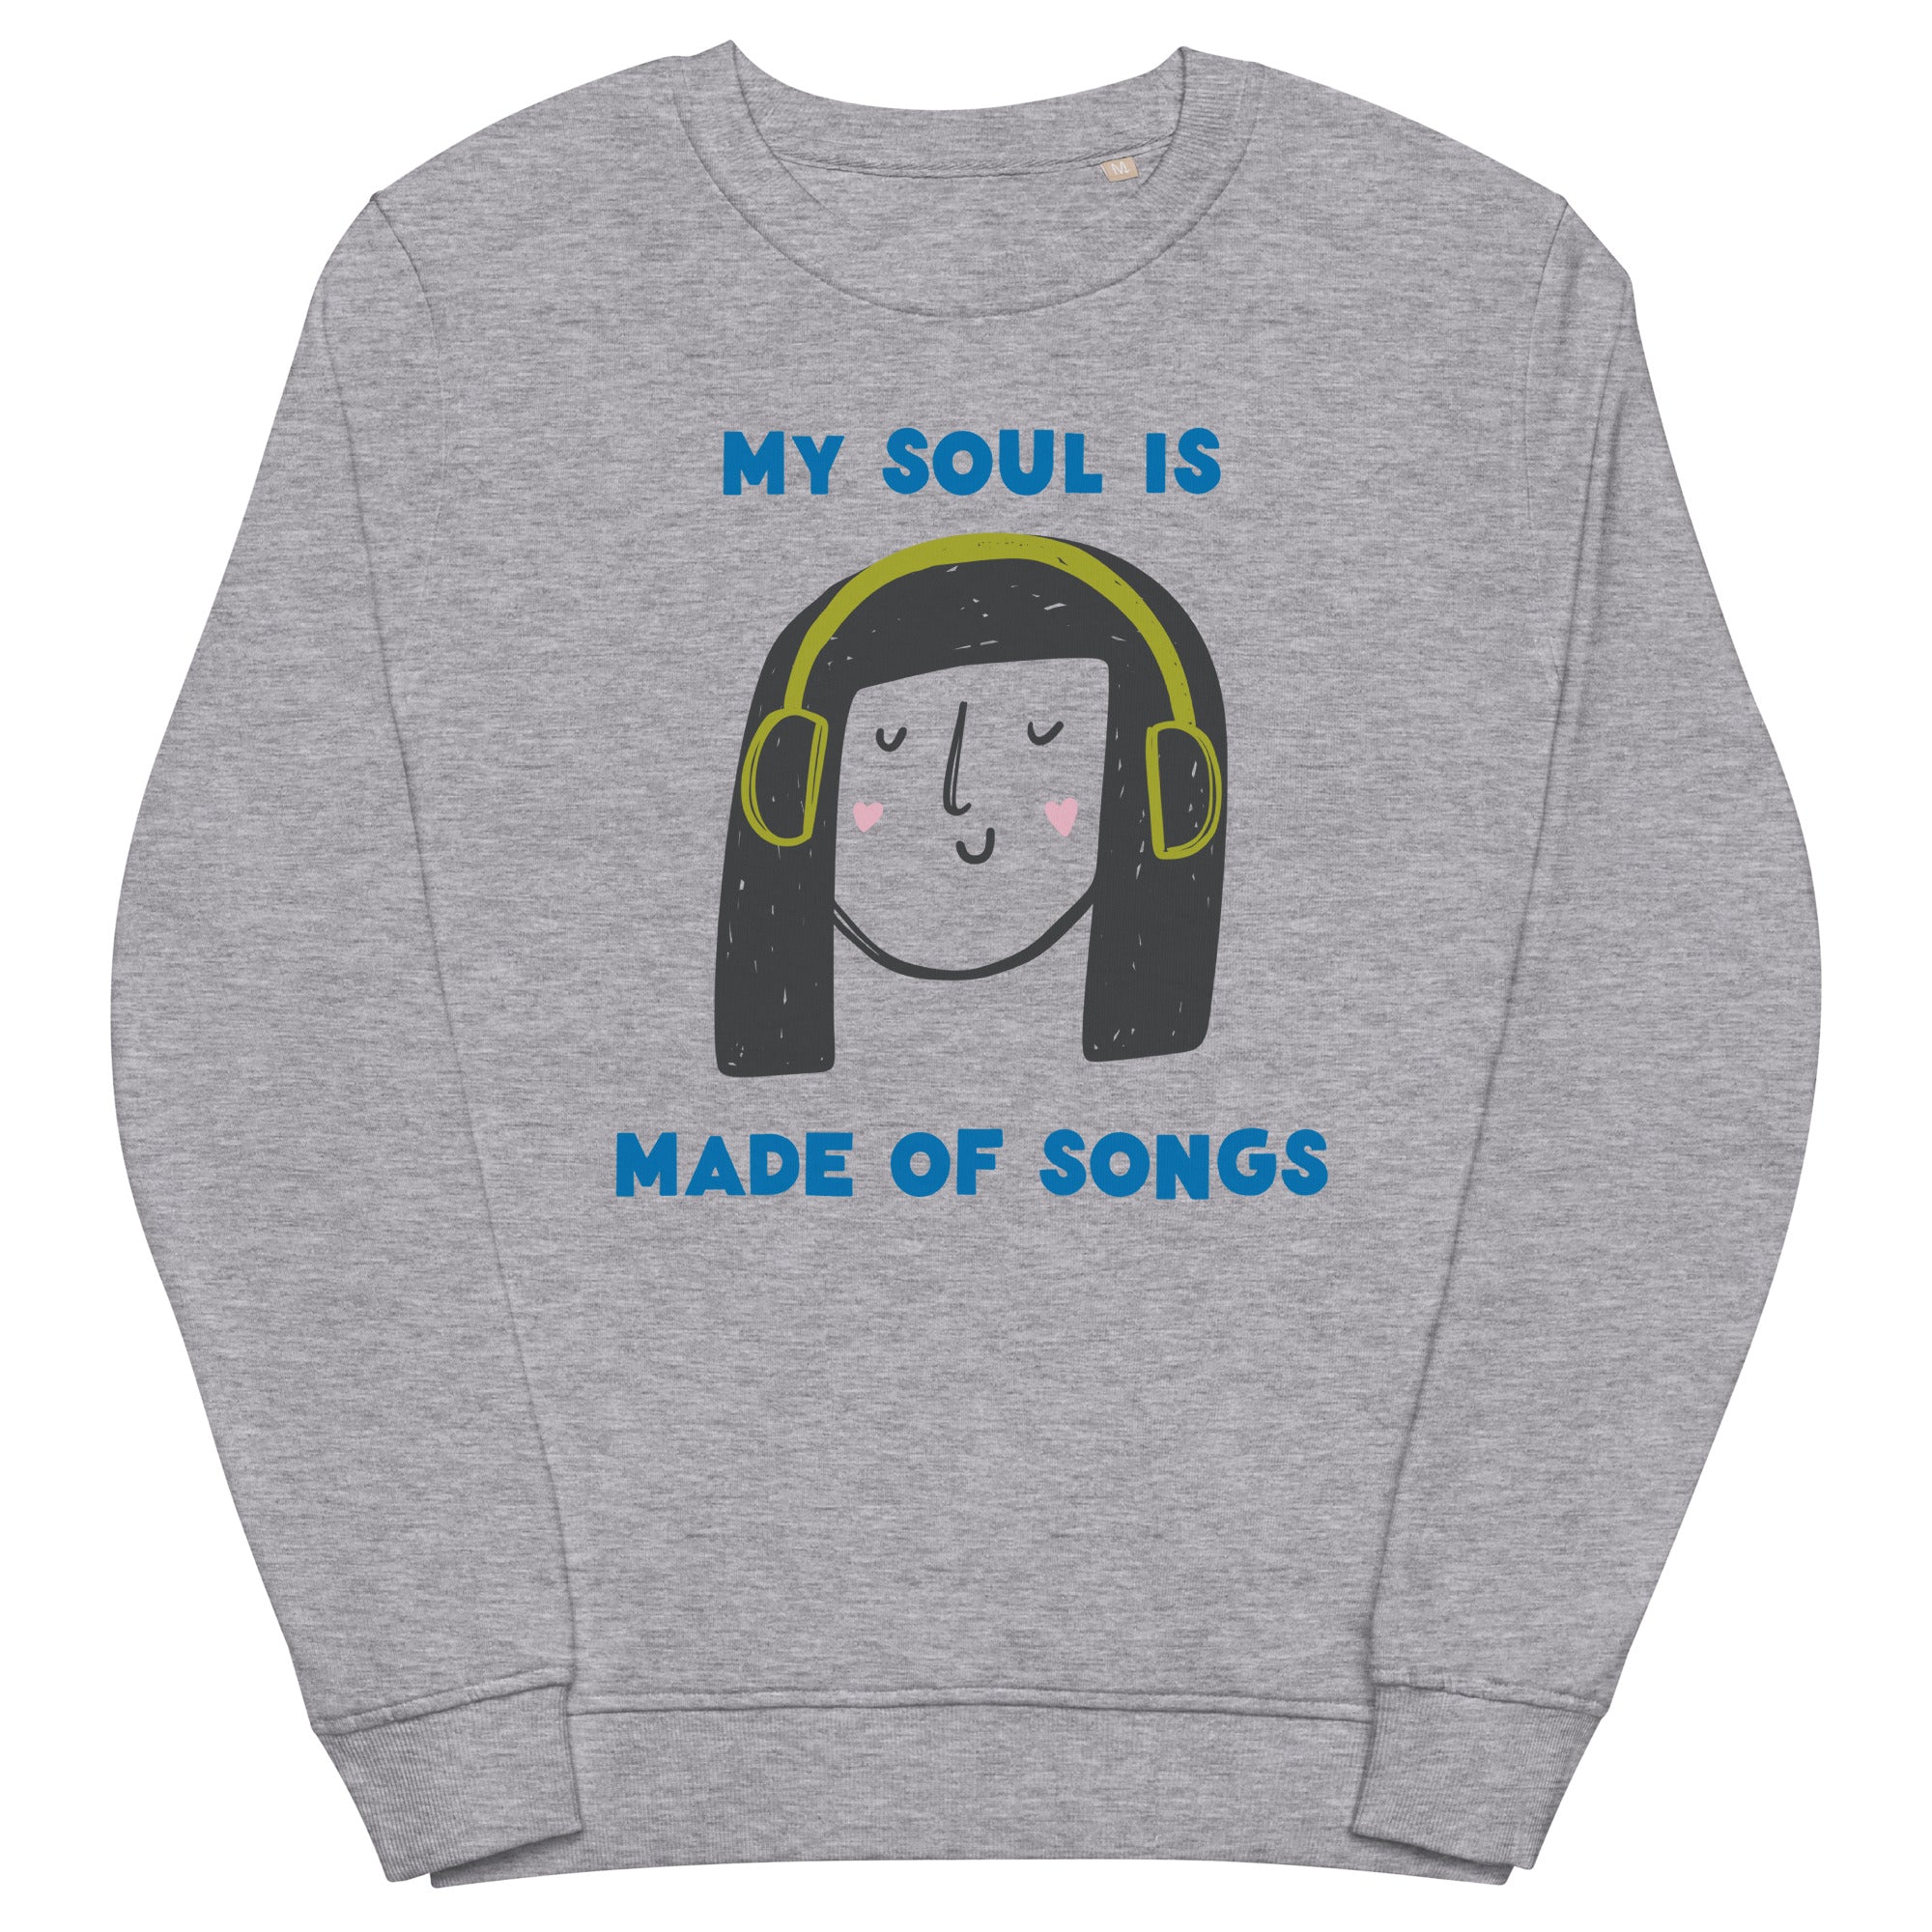 Made of Songs - Organic/Recycled Sweatshirt